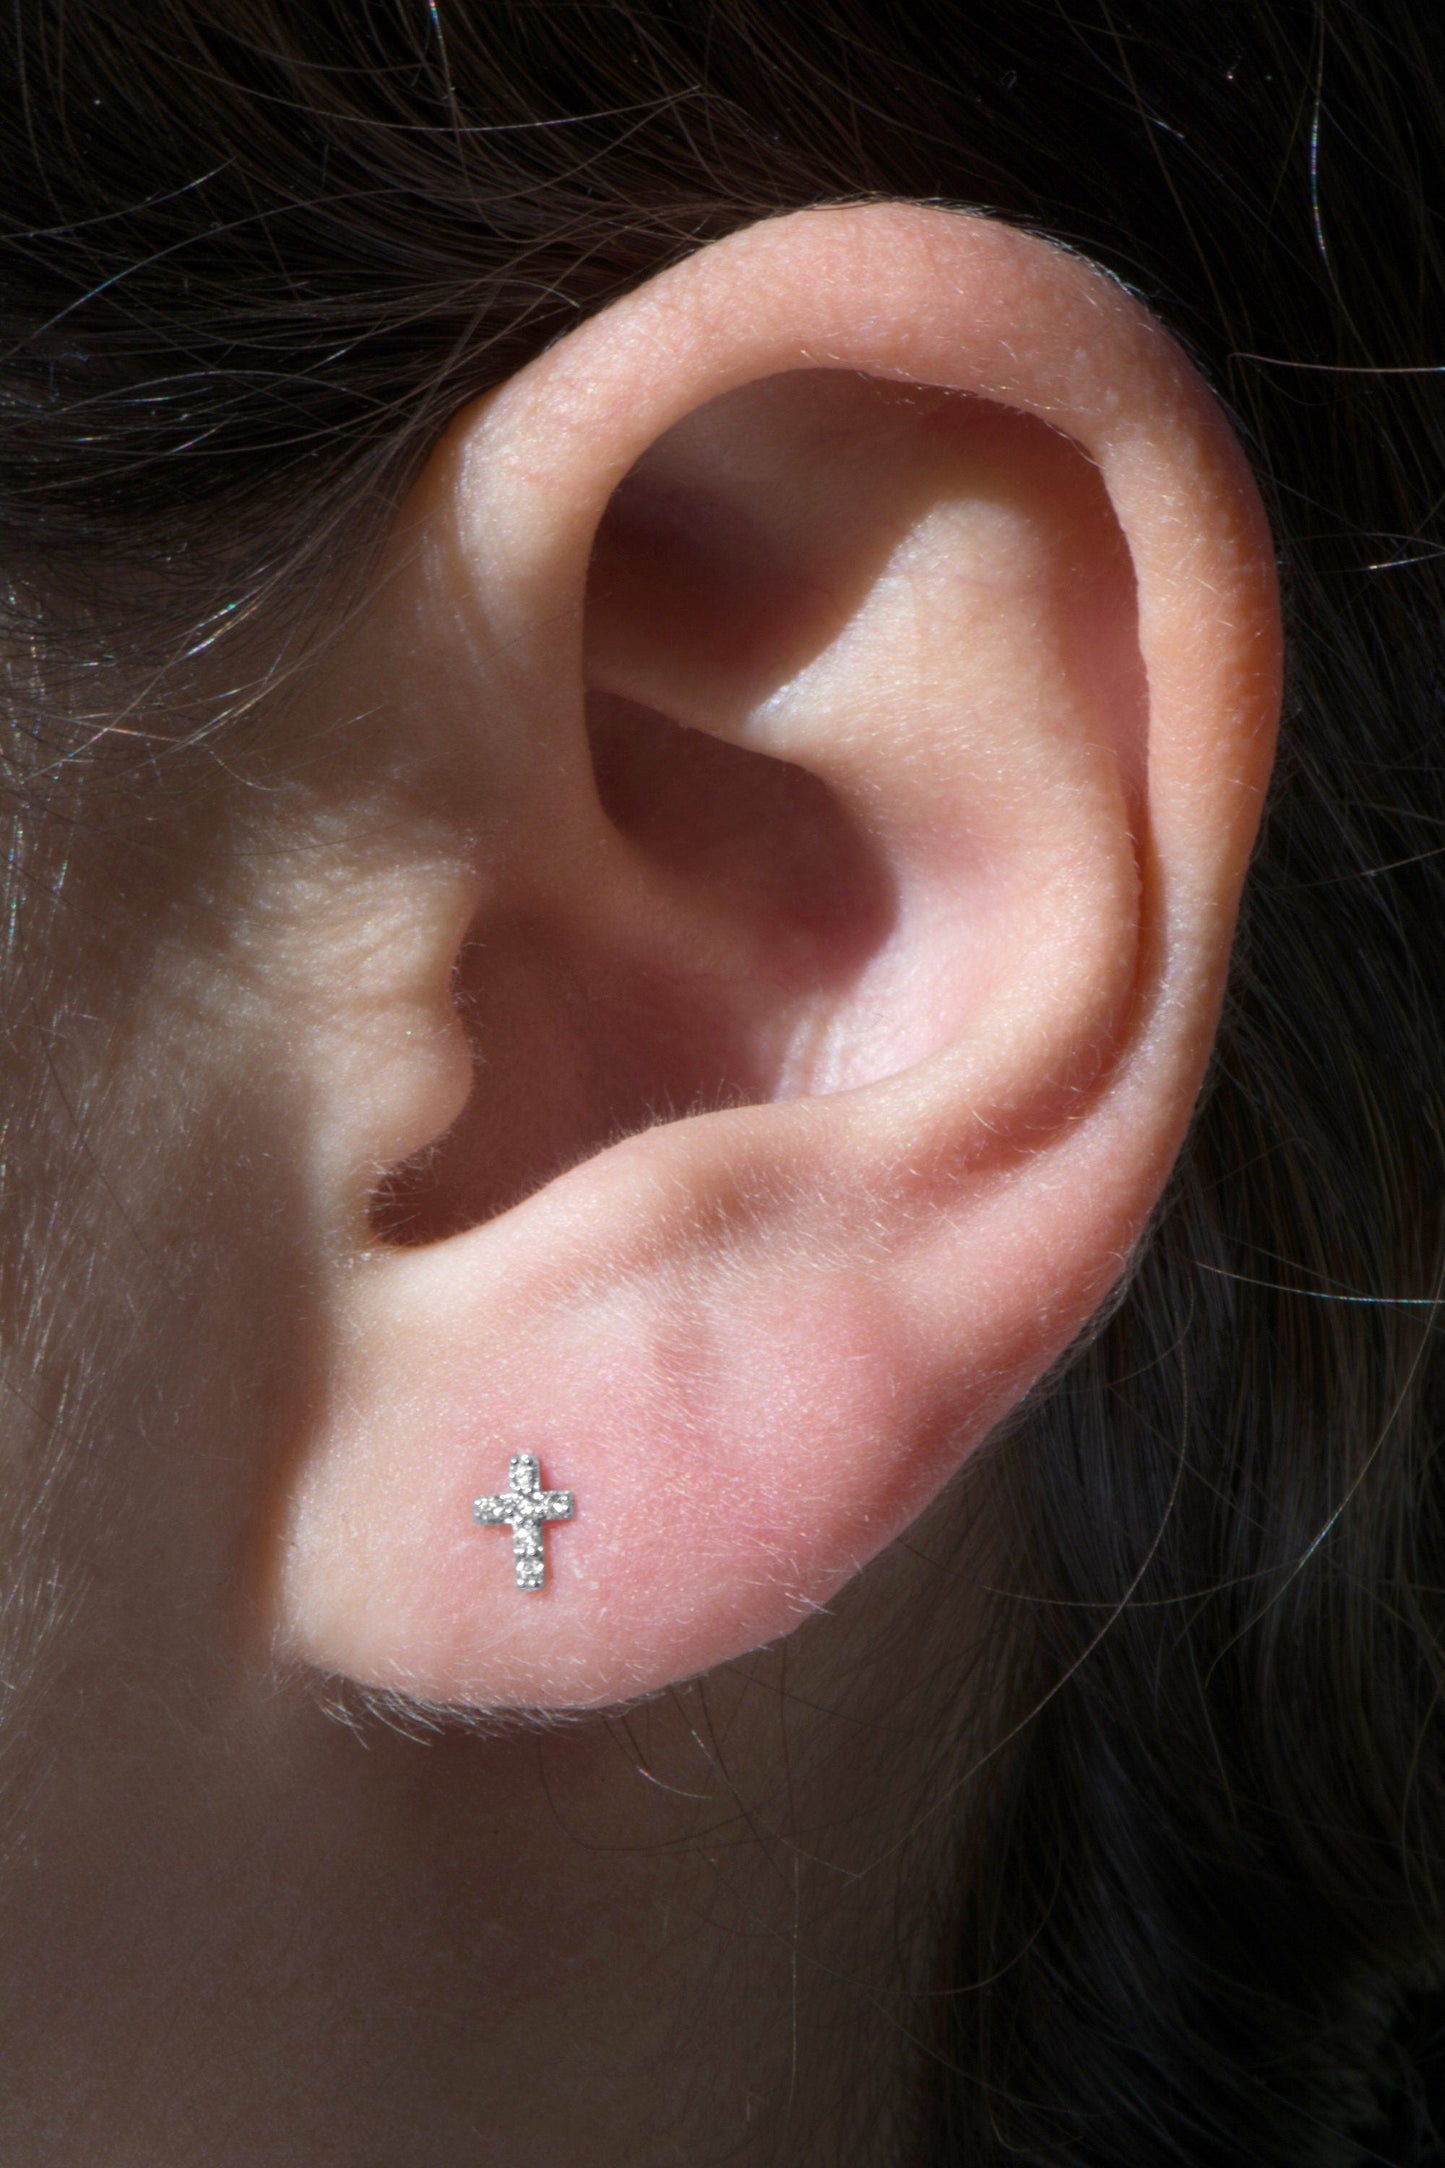 14k Gold Tiny Cross Diamond Stud Earrings